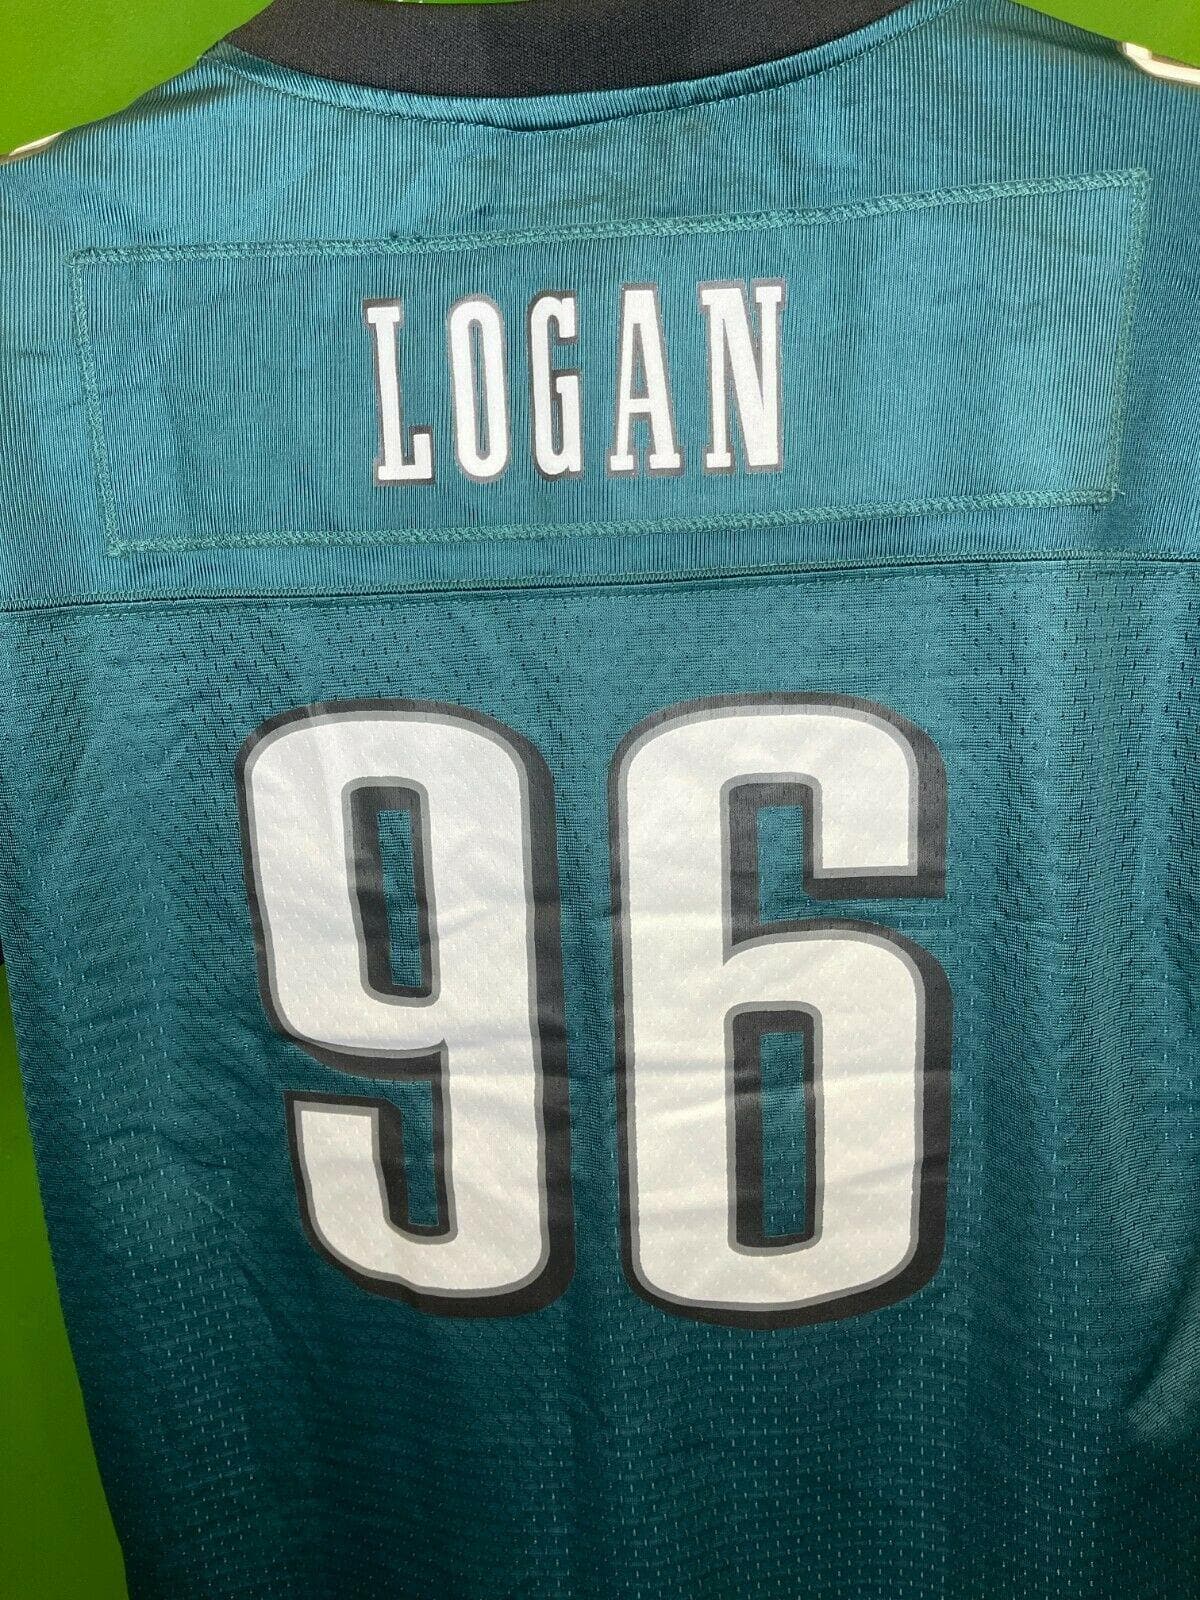 NFL Philadelphia Eagles Bennie Logan #96 ProLine Jersey Youth XL 18-20